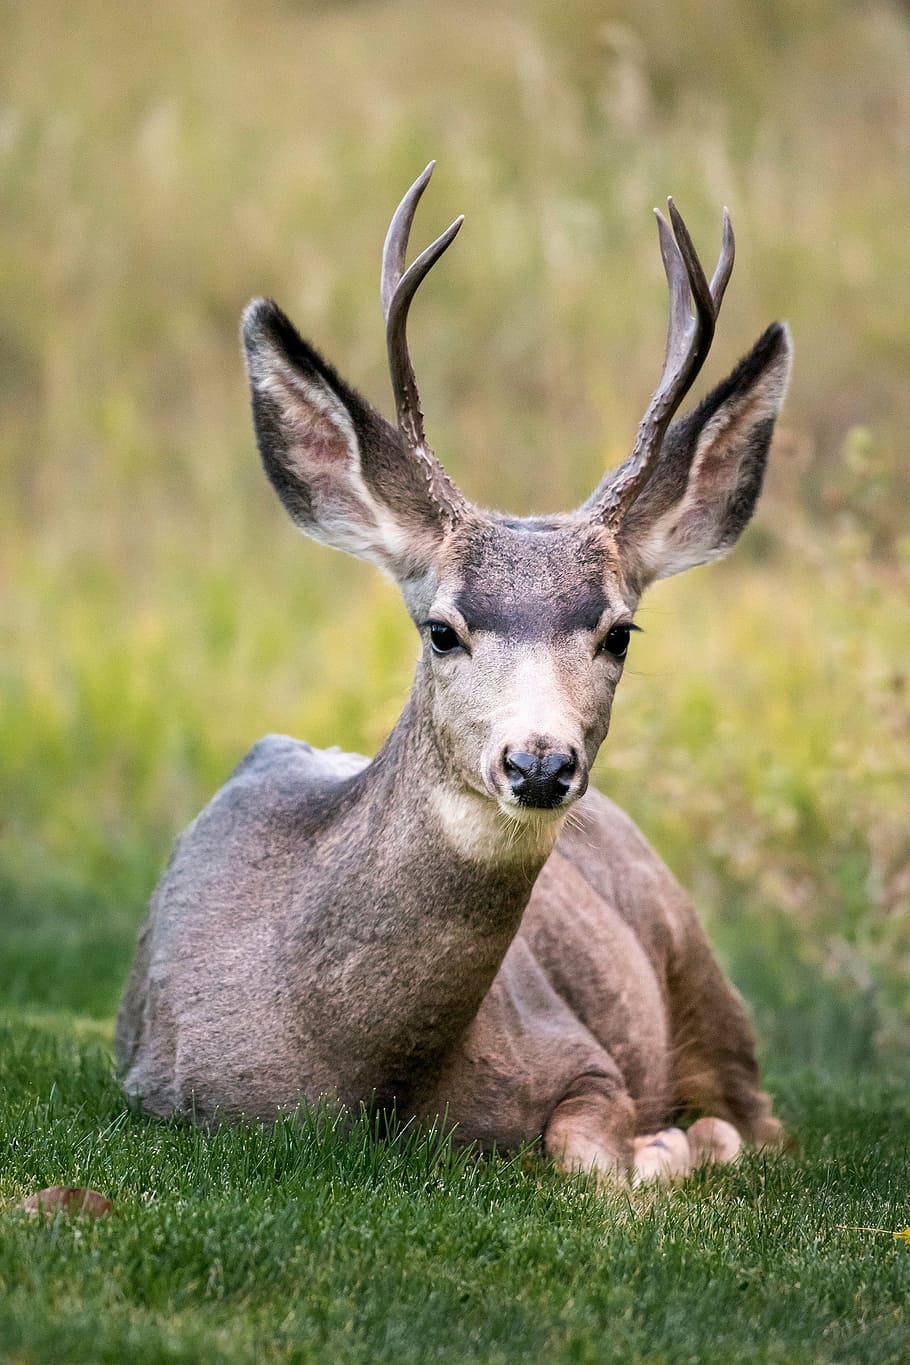 brown, deer, lying, green, grass field, shallow, focus, photography, gray, sitting